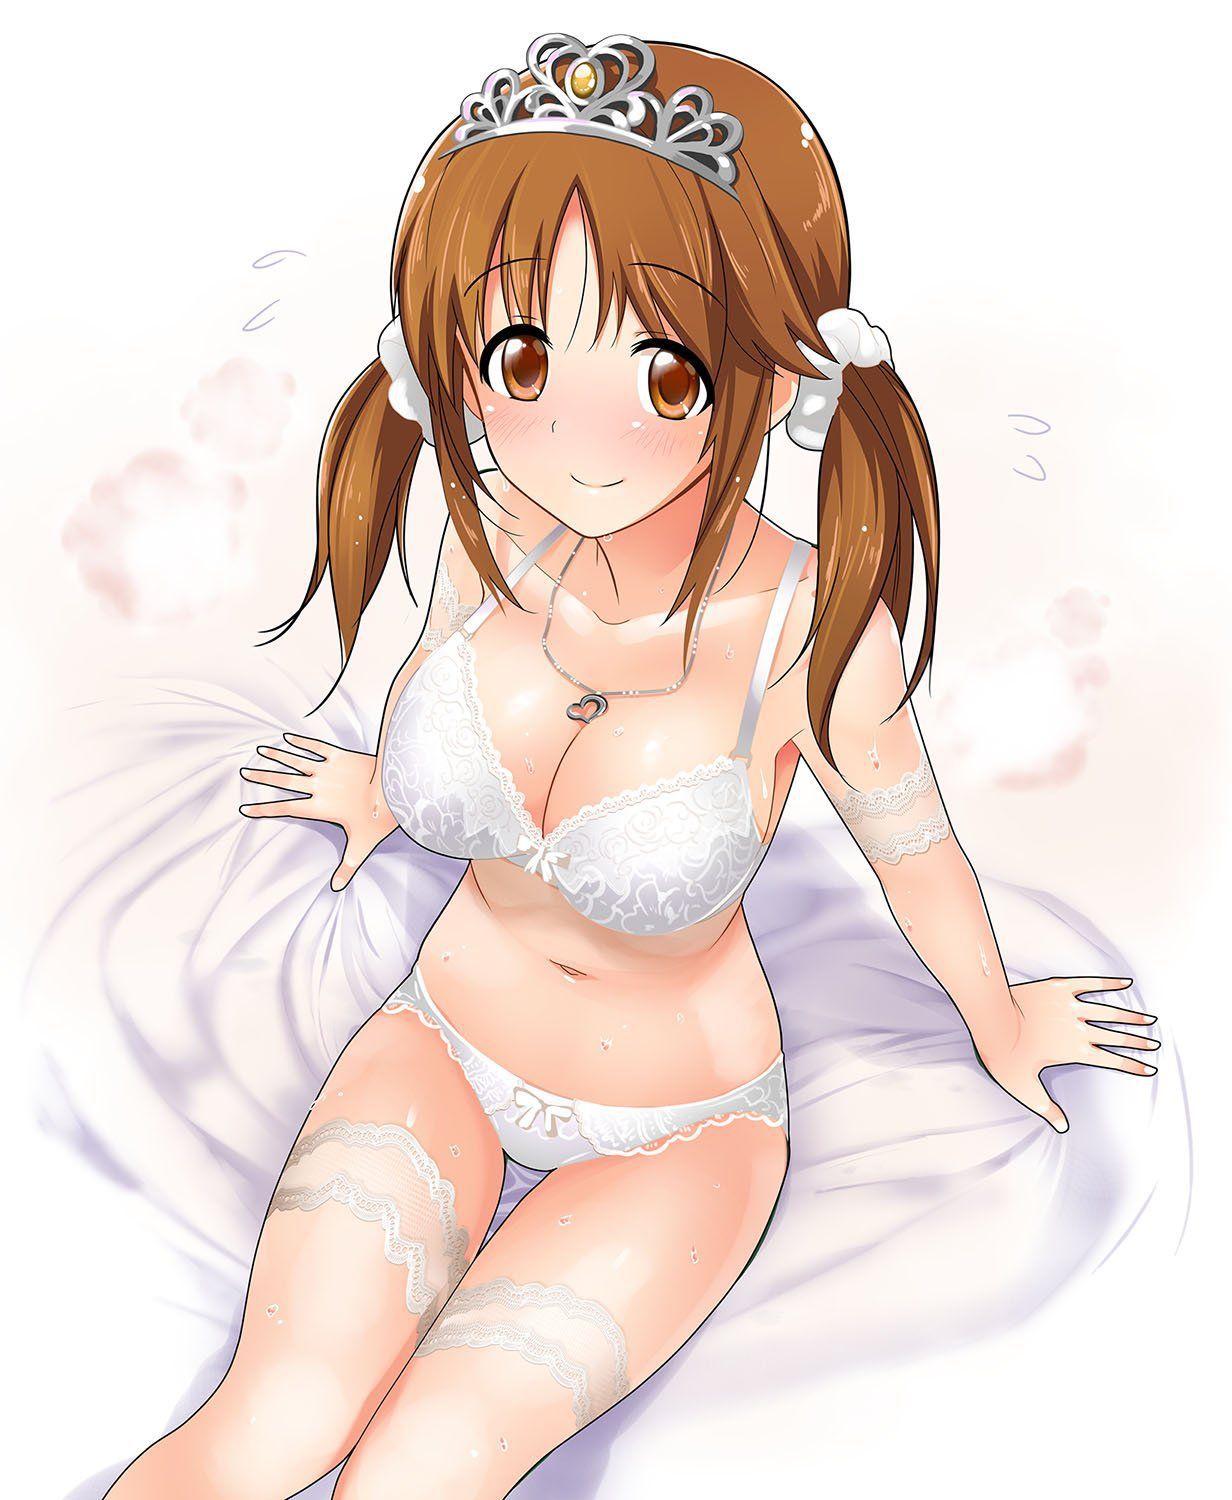 【Erotic Anime Summary】 Erotic image of a creepy girl wearing white pure white underwear 【Secondary erotic】 10